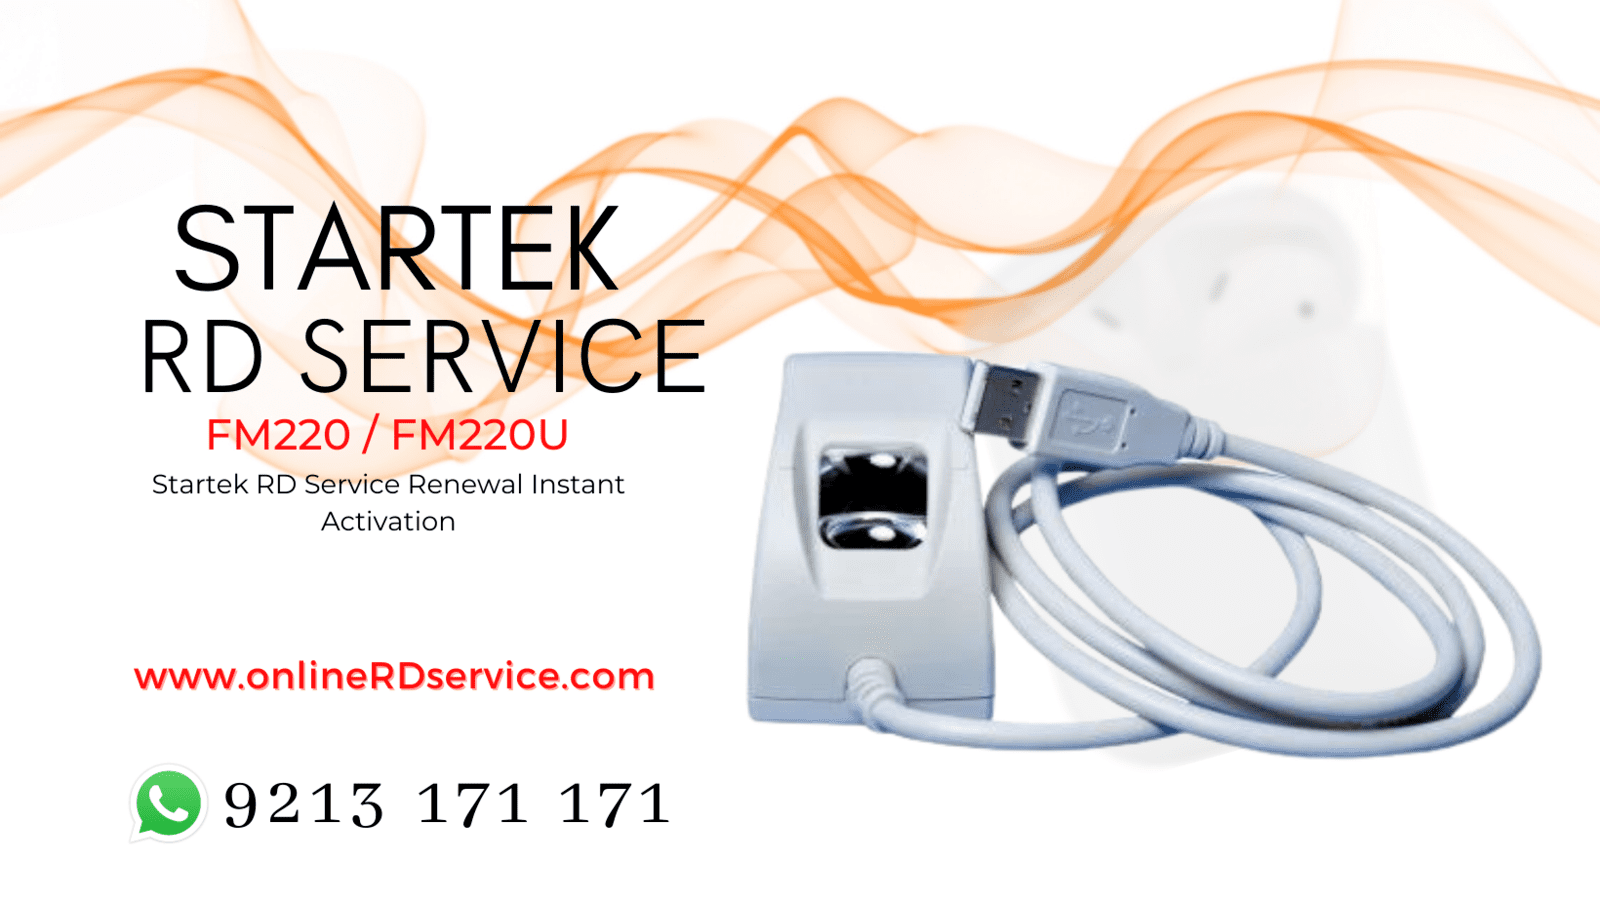 Startek FM220 Rd Service